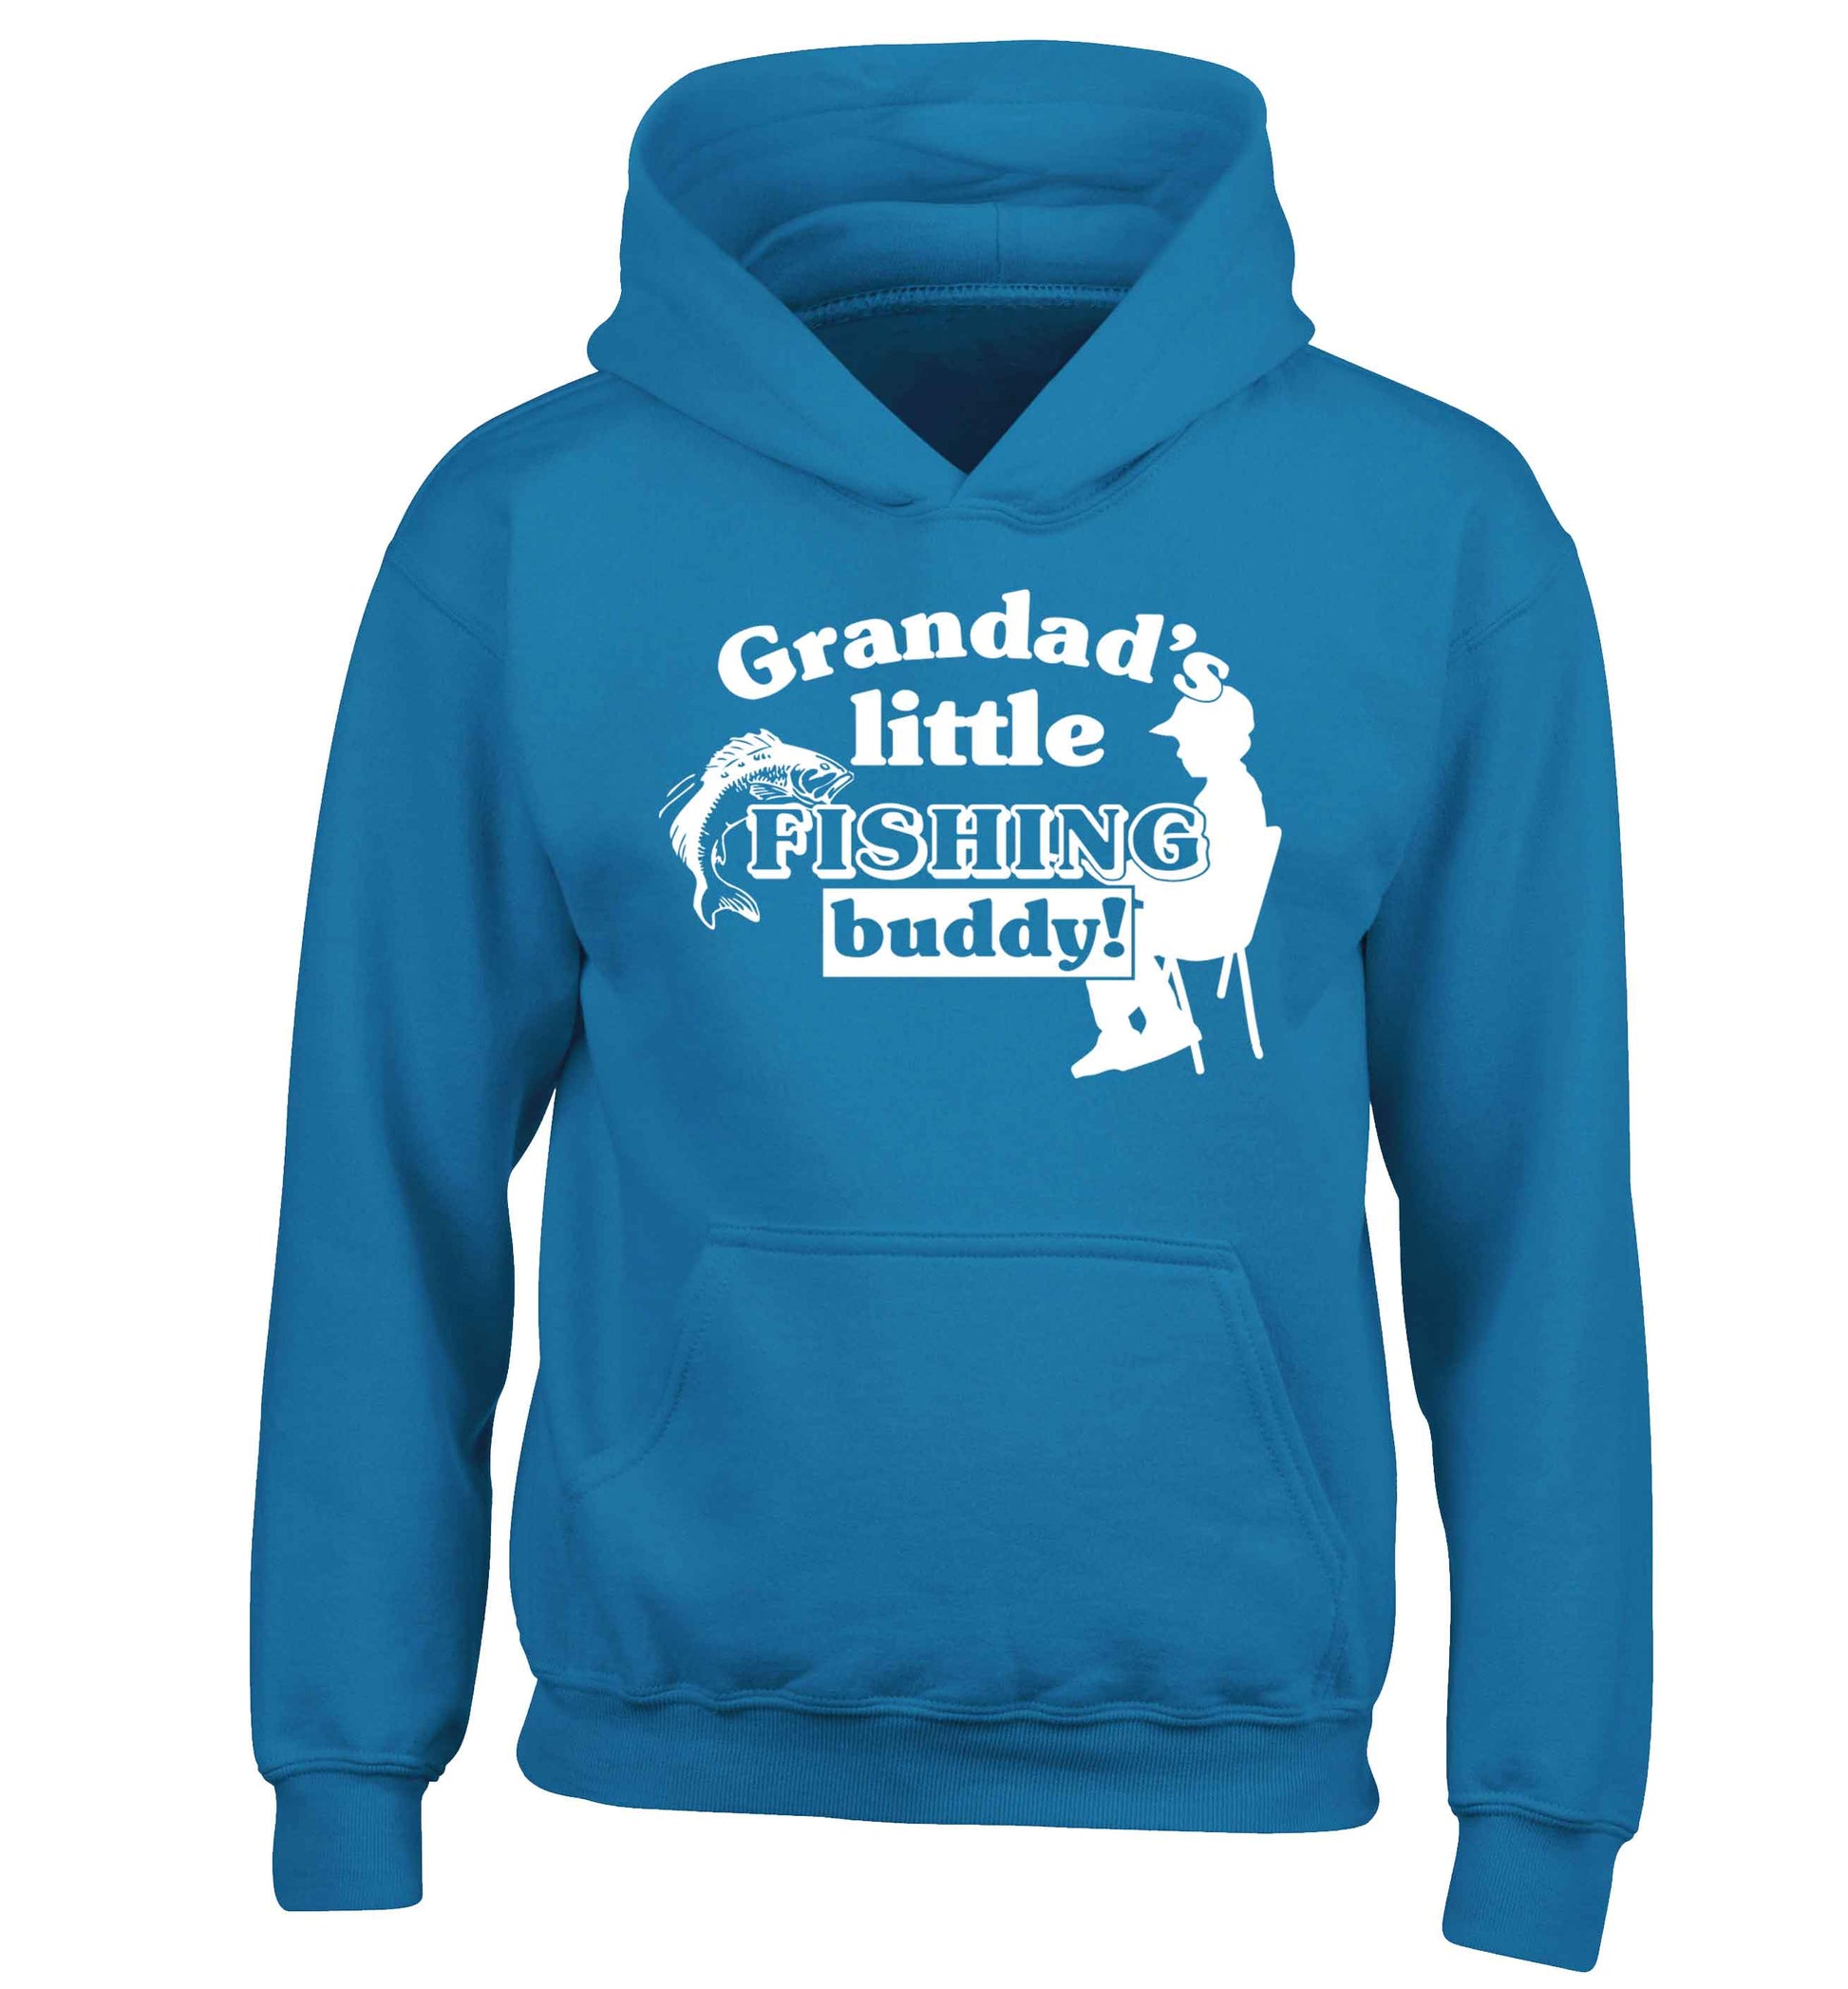 Grandad's little fishing buddy! children's blue hoodie 12-13 Years